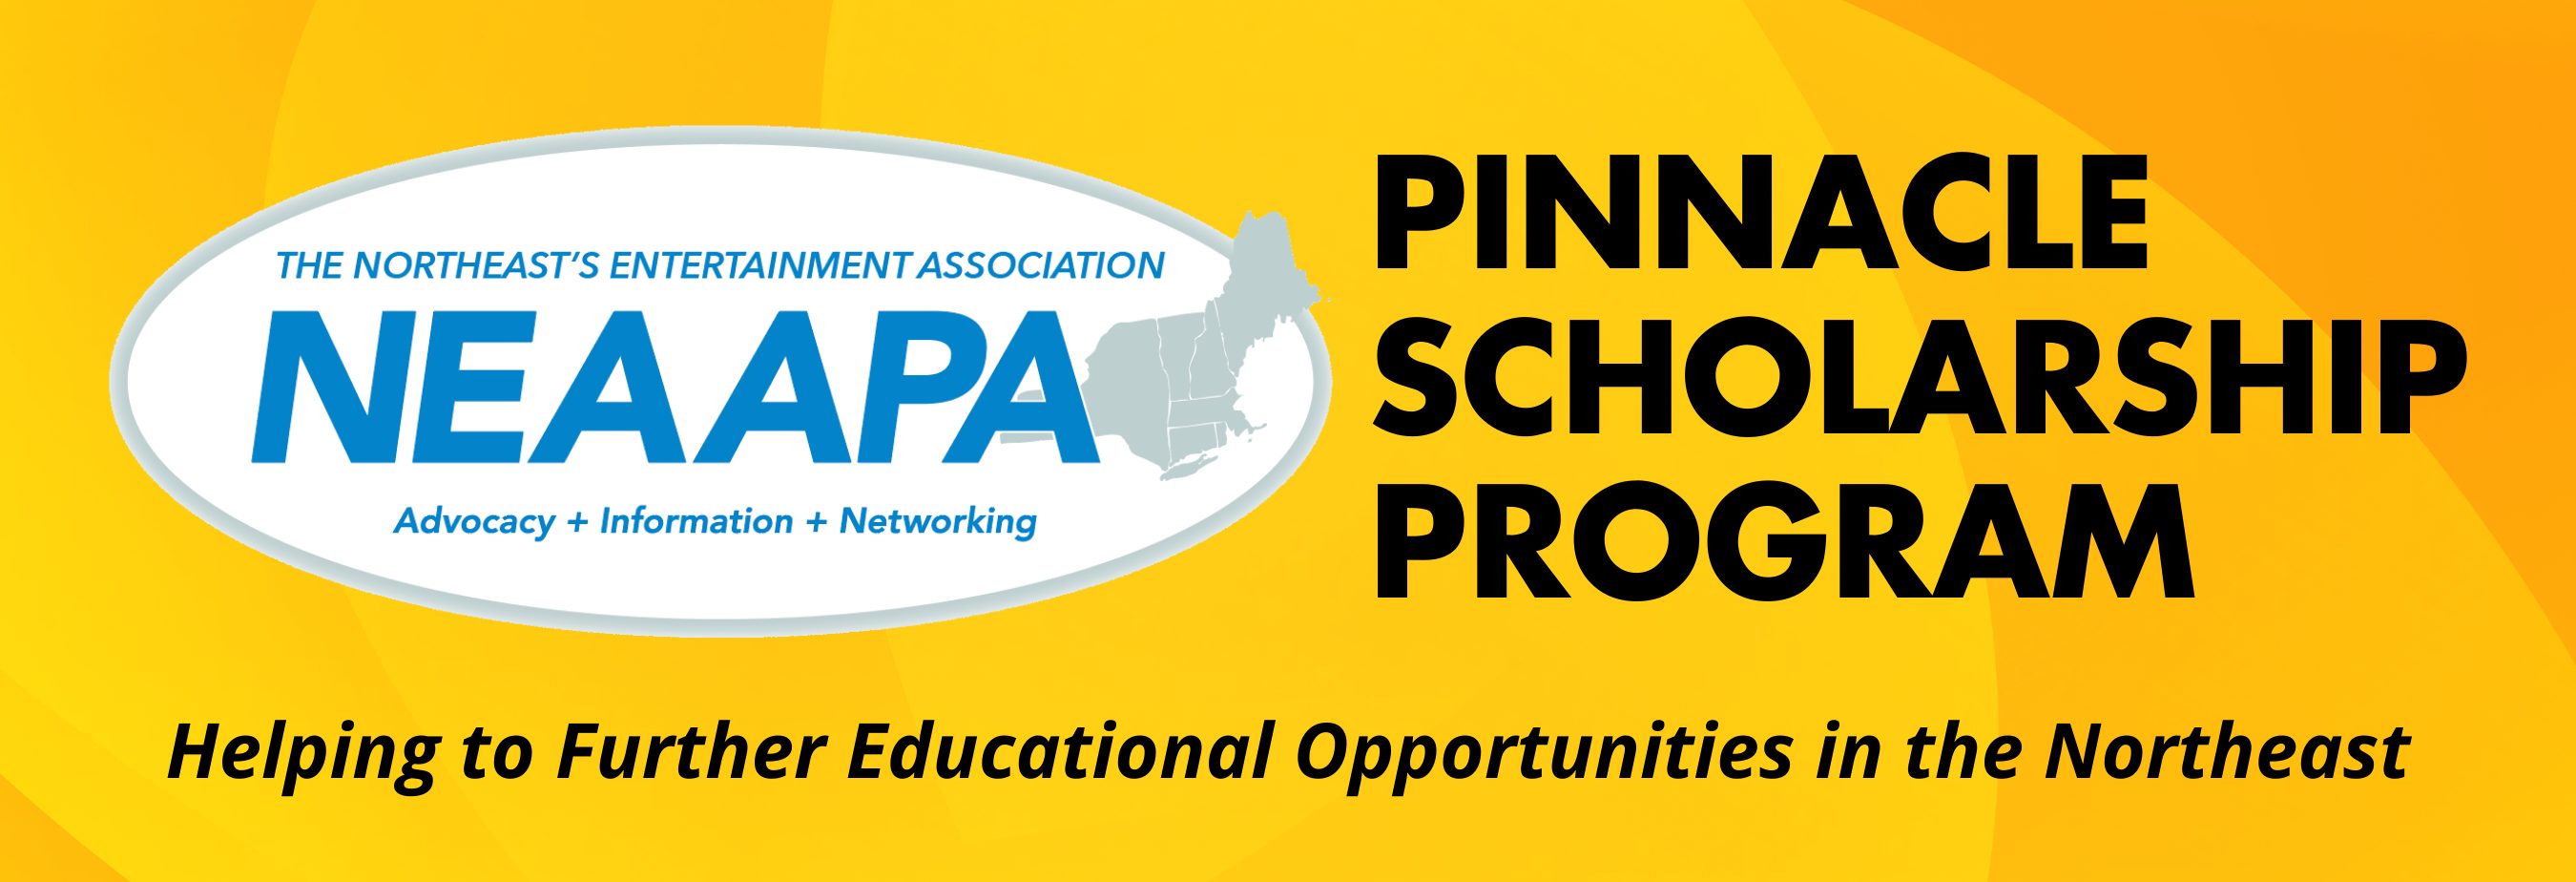 NEAAPA Pinnacle Scholarship Program